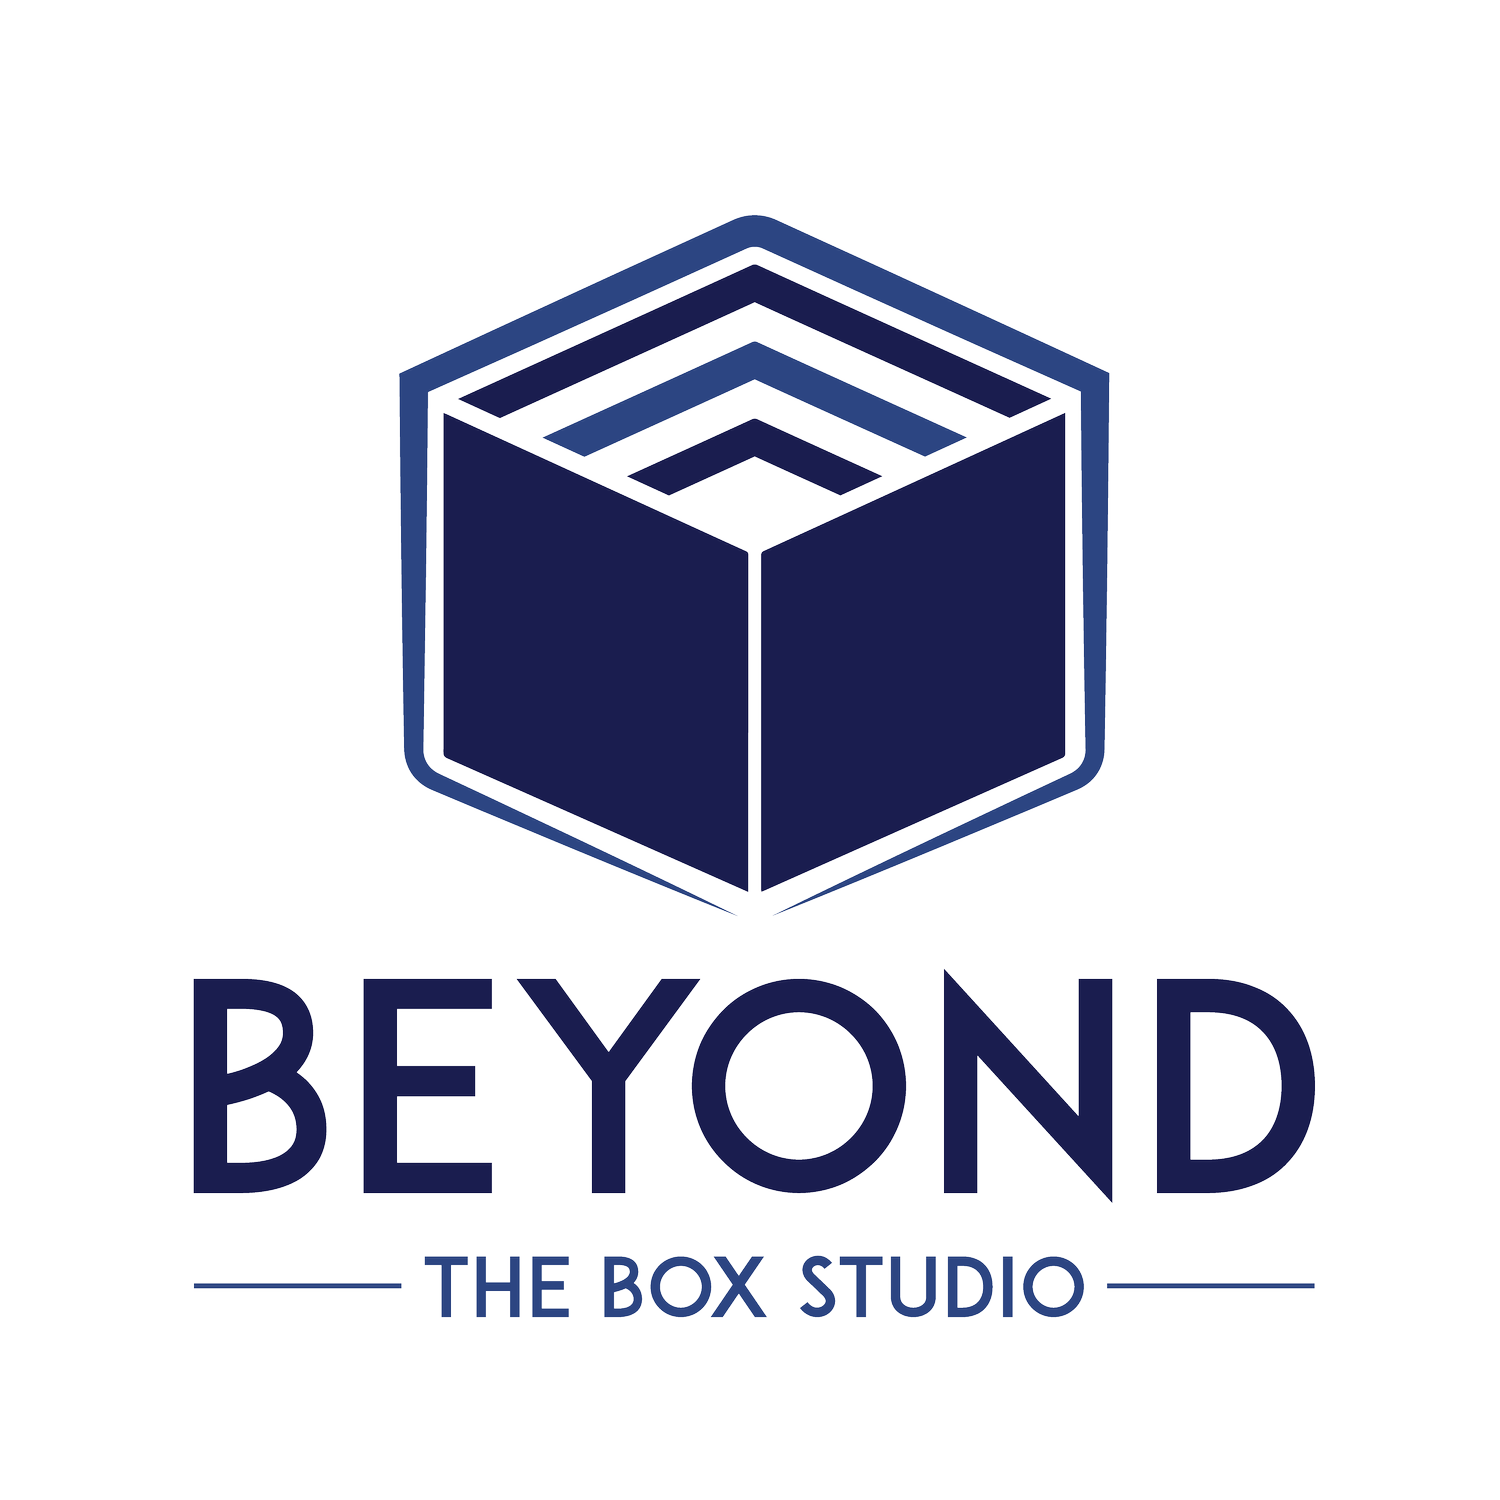 Beyond The Box Studio